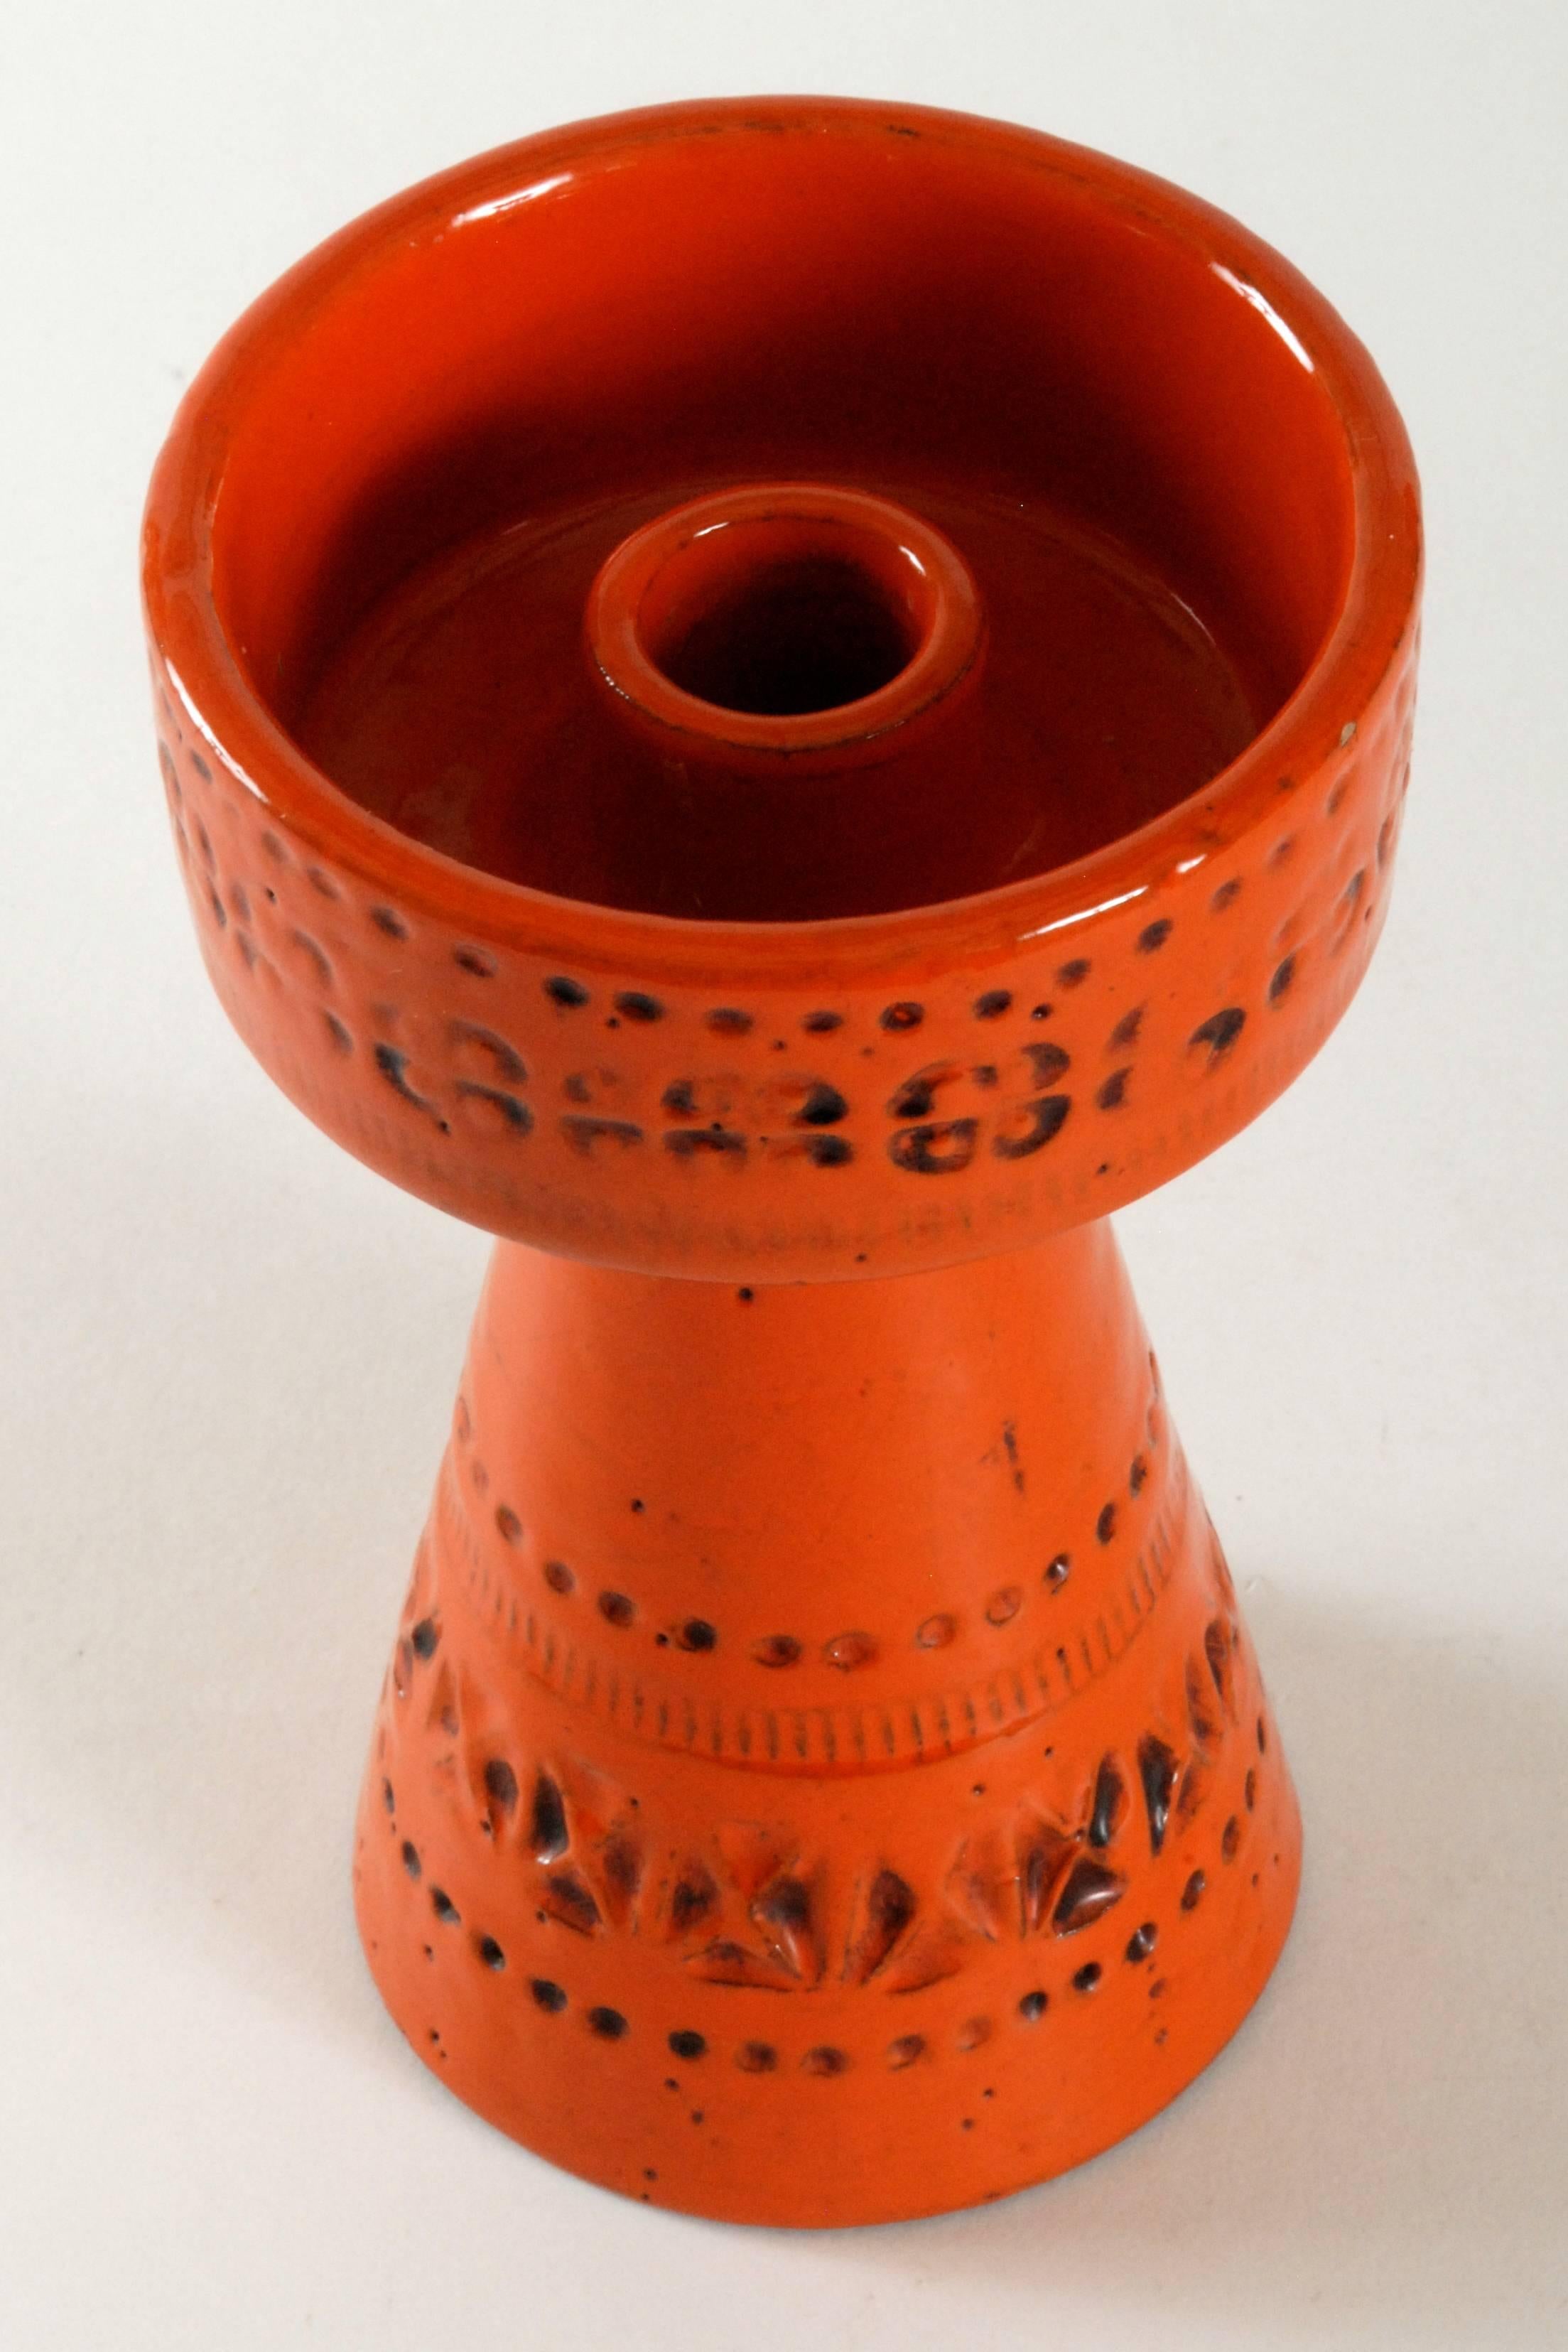 A brilliant orange candleholder in the 'Rimini' pattern designed by Aldo Londi.